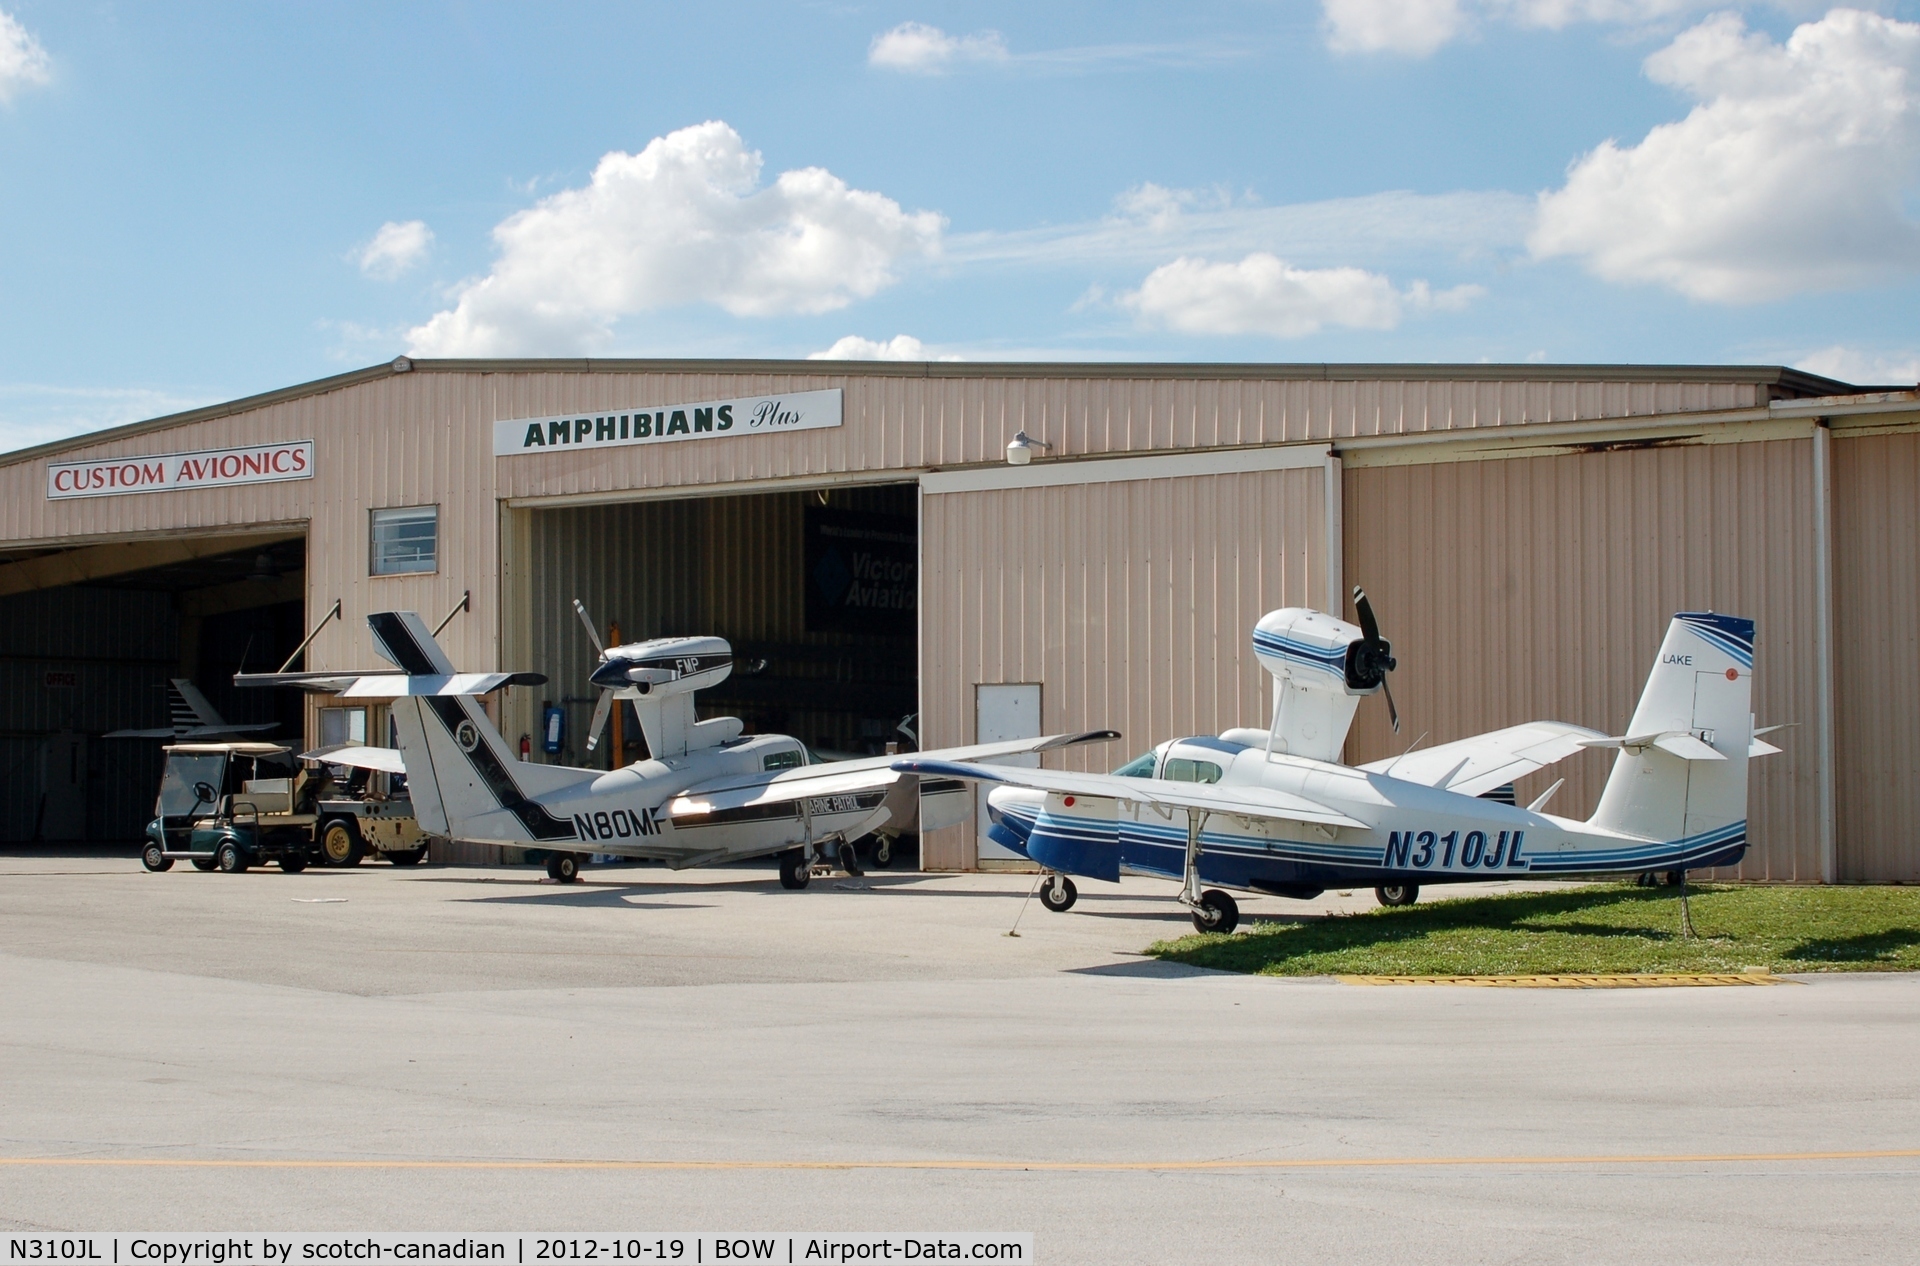 N310JL, 1976 Consolidated Aeronautics Inc. LAKE LA-4-200 C/N 775, 1976 Consolidated Aeronautics Inc. LAKE LA-4-200 N310JL at Bartow Municipal Airport, Bartow, FL